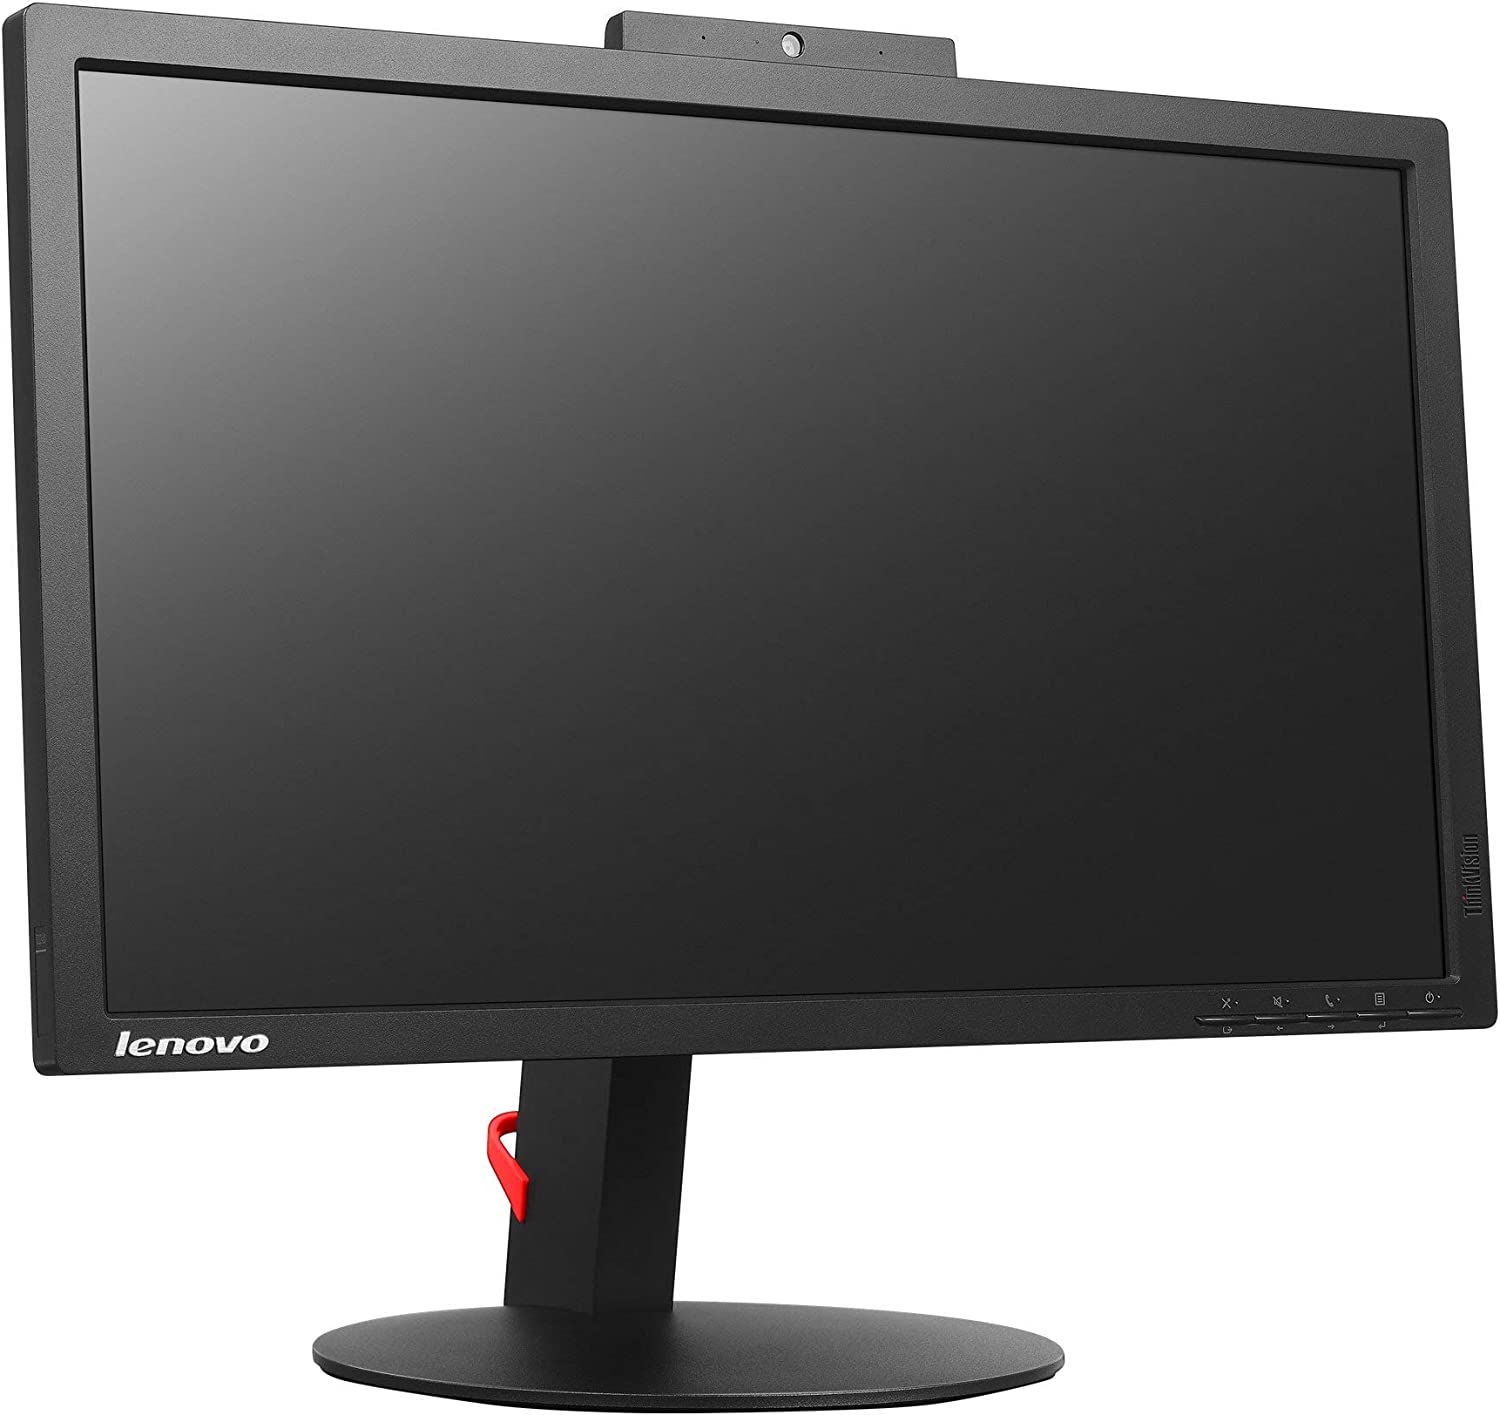 Lenovo ThinkVision T2224z 21.5 inches LED LCD Monitor - 16:9 7ms HDMI VGA DisplayPort USB WebCam (Renewed)